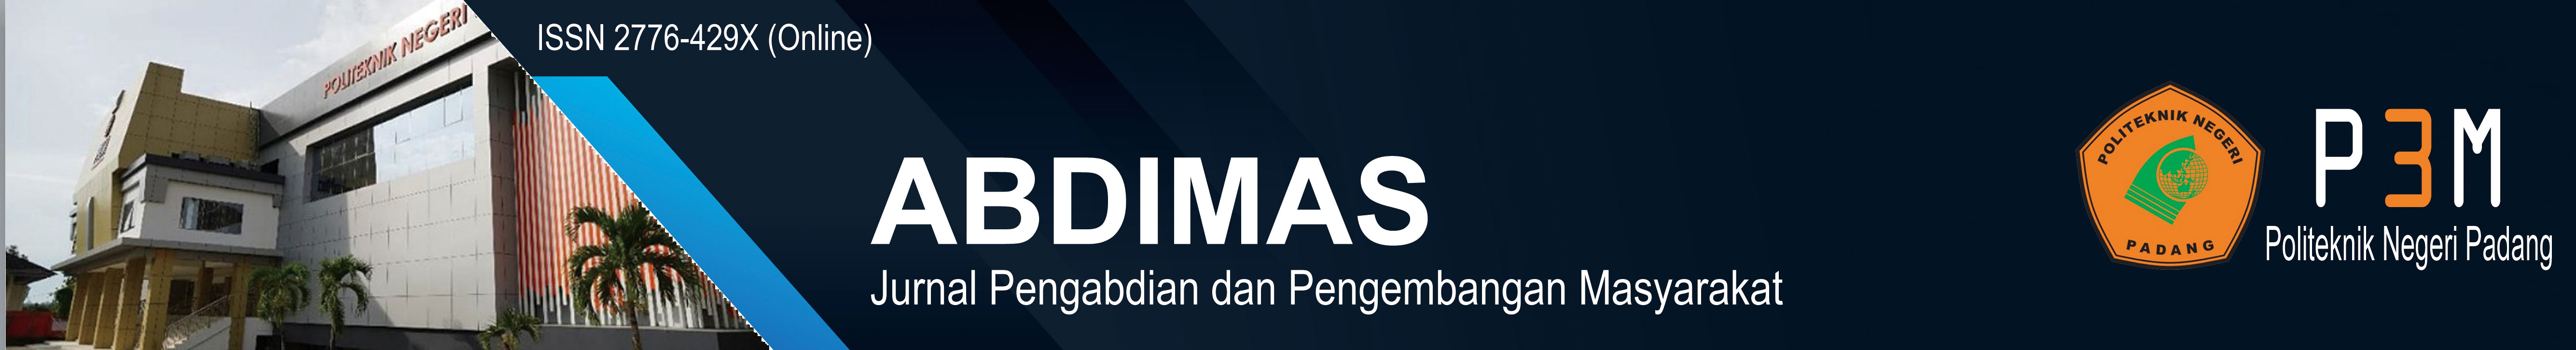 Jurnal Abdimas - Jurnal Pengabdian Kepada Masyarakat Politeknik Negeri Padang